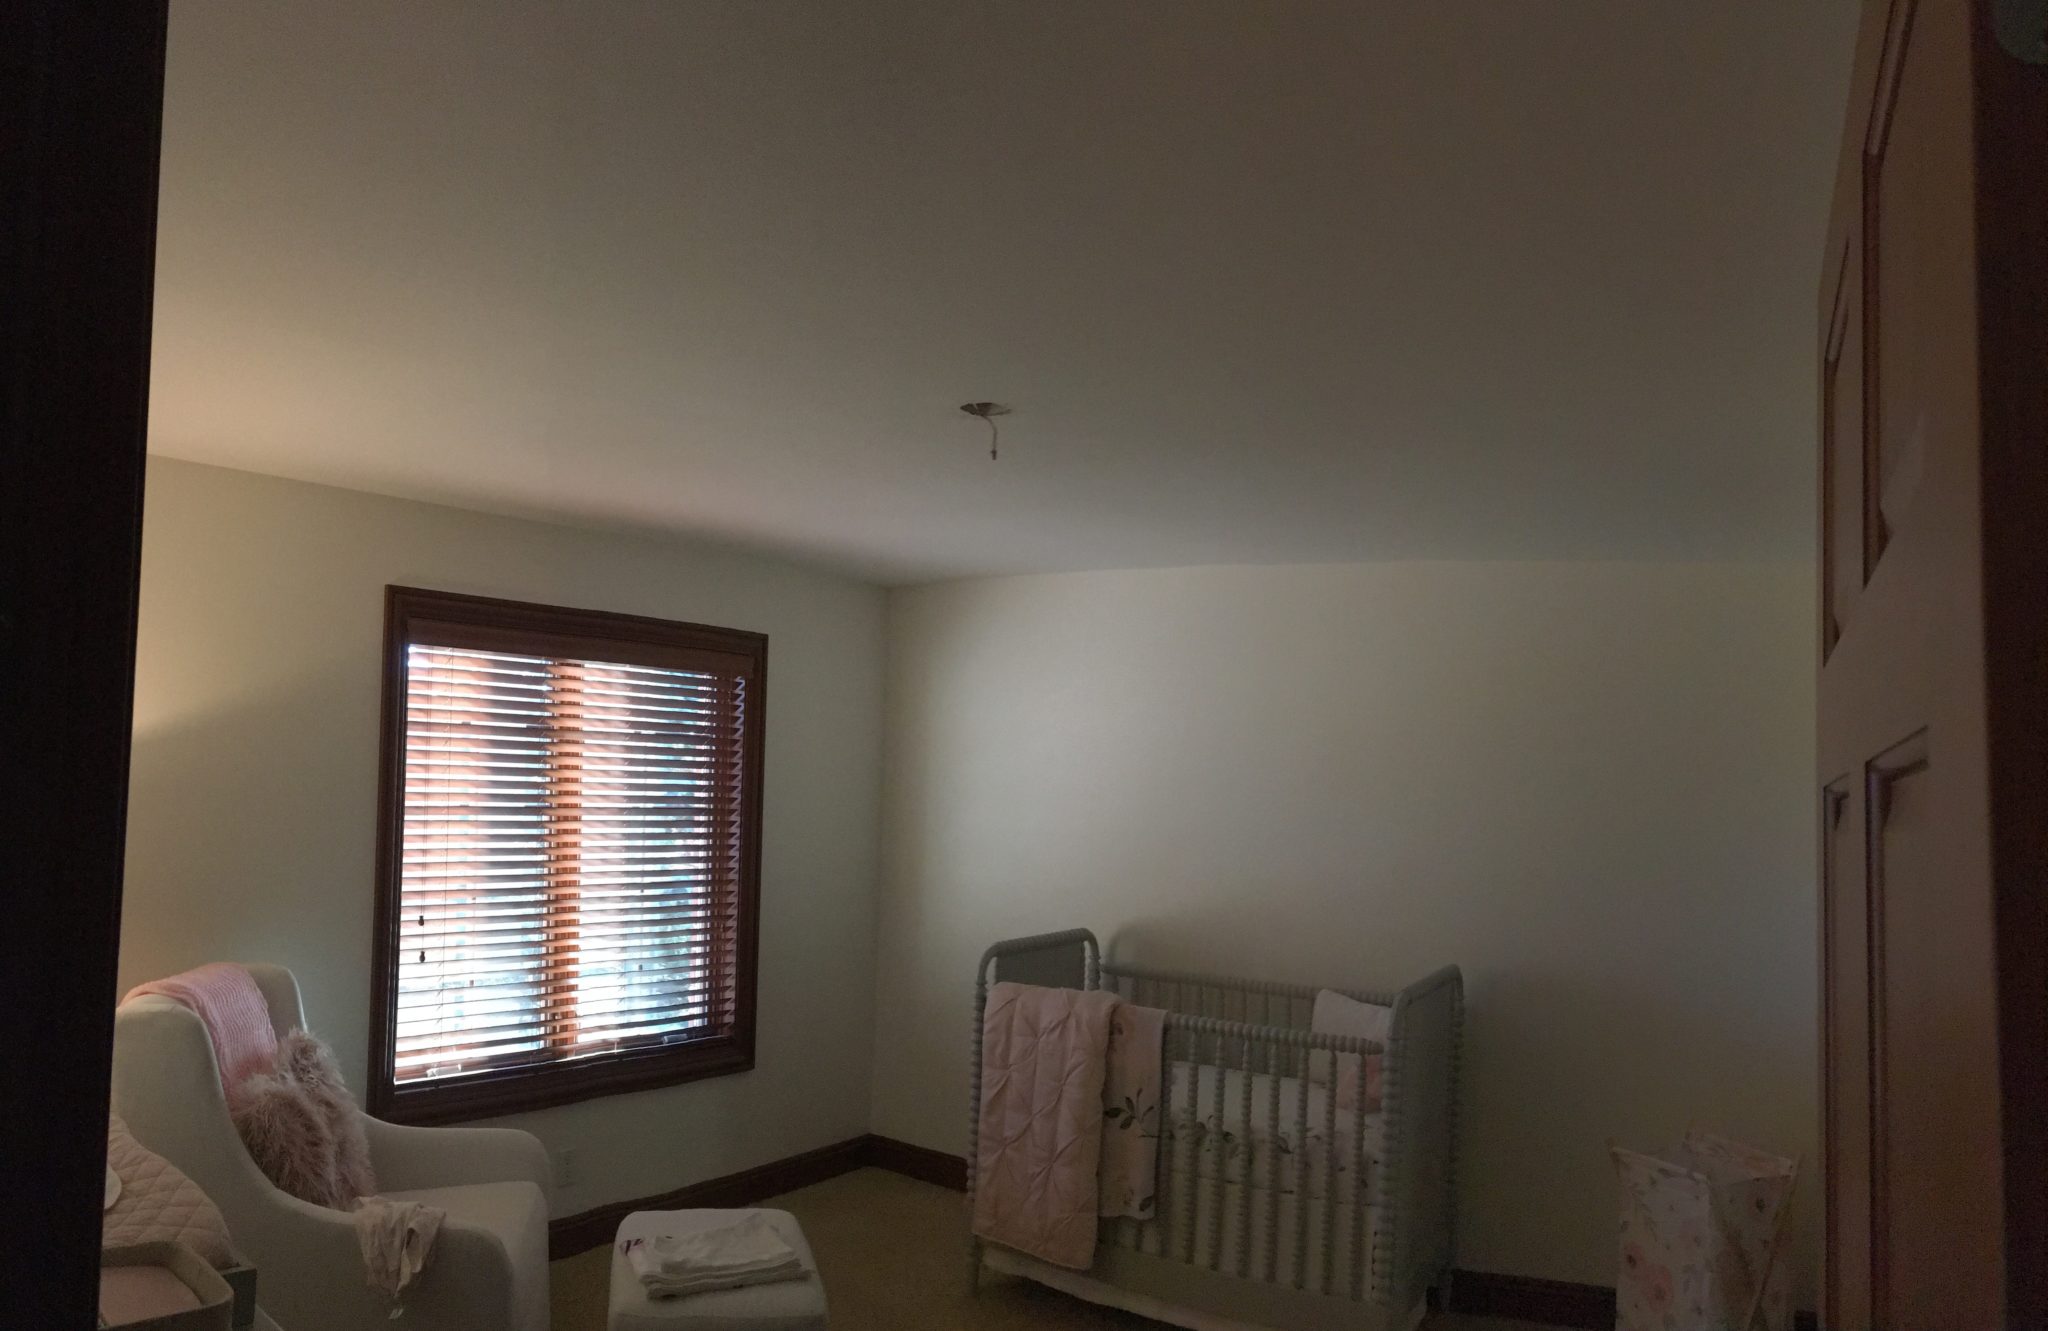 Wallpaper for A Baby's Room Ceiling - Wallpaper Installation - Elgin